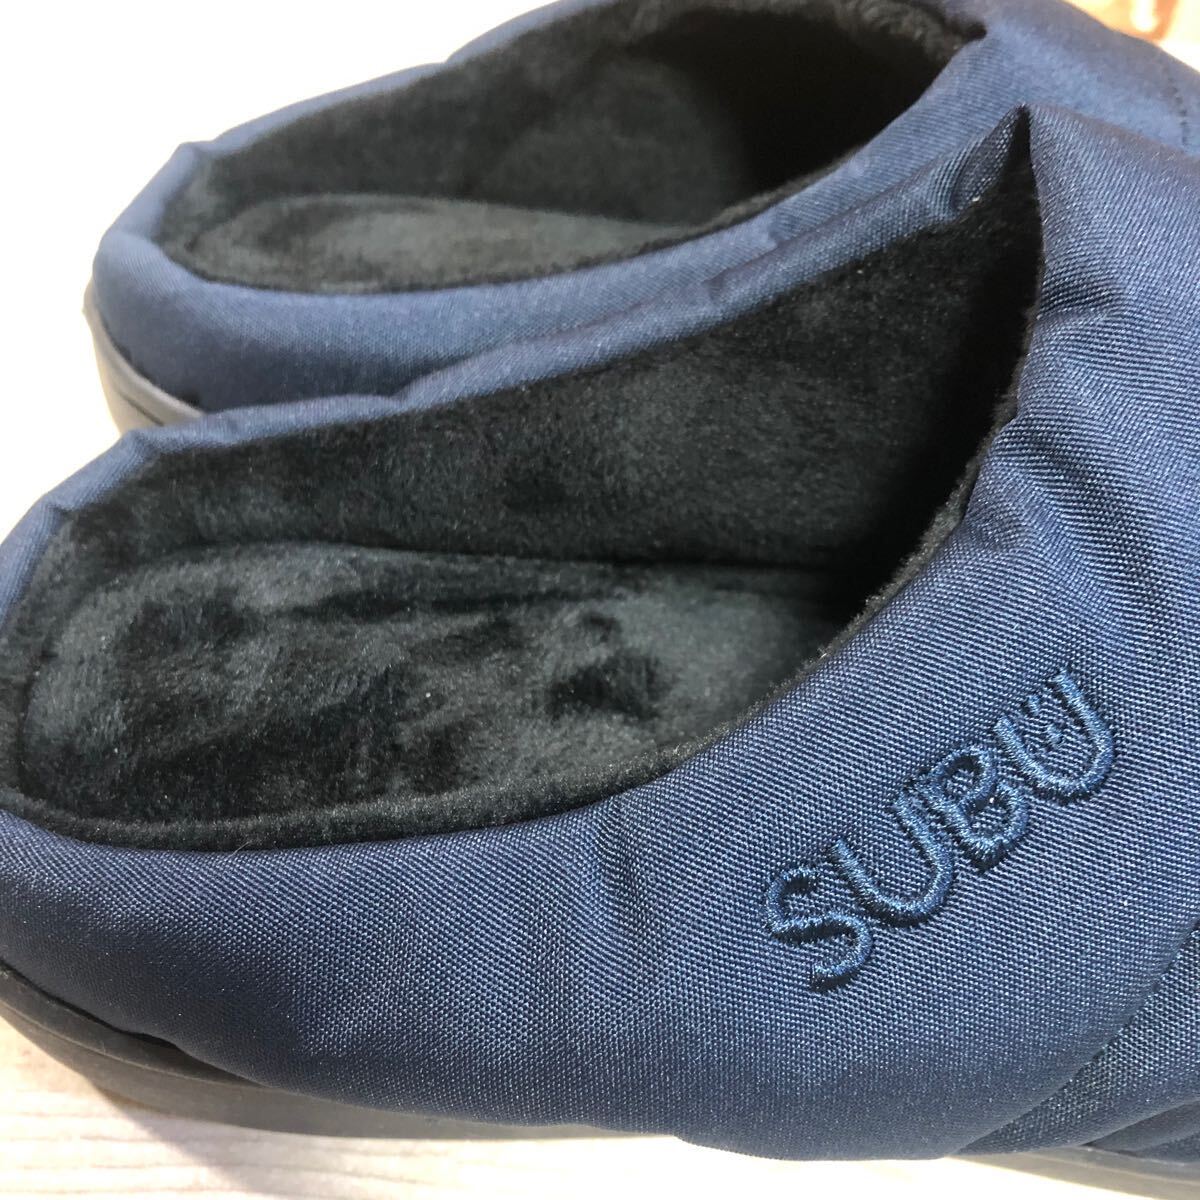  с биркой не использовался товар sb какой год down сандалии SUBU NANNEN 24~25.5 темно-синий сандалии боа Sagawa Express соответствие .